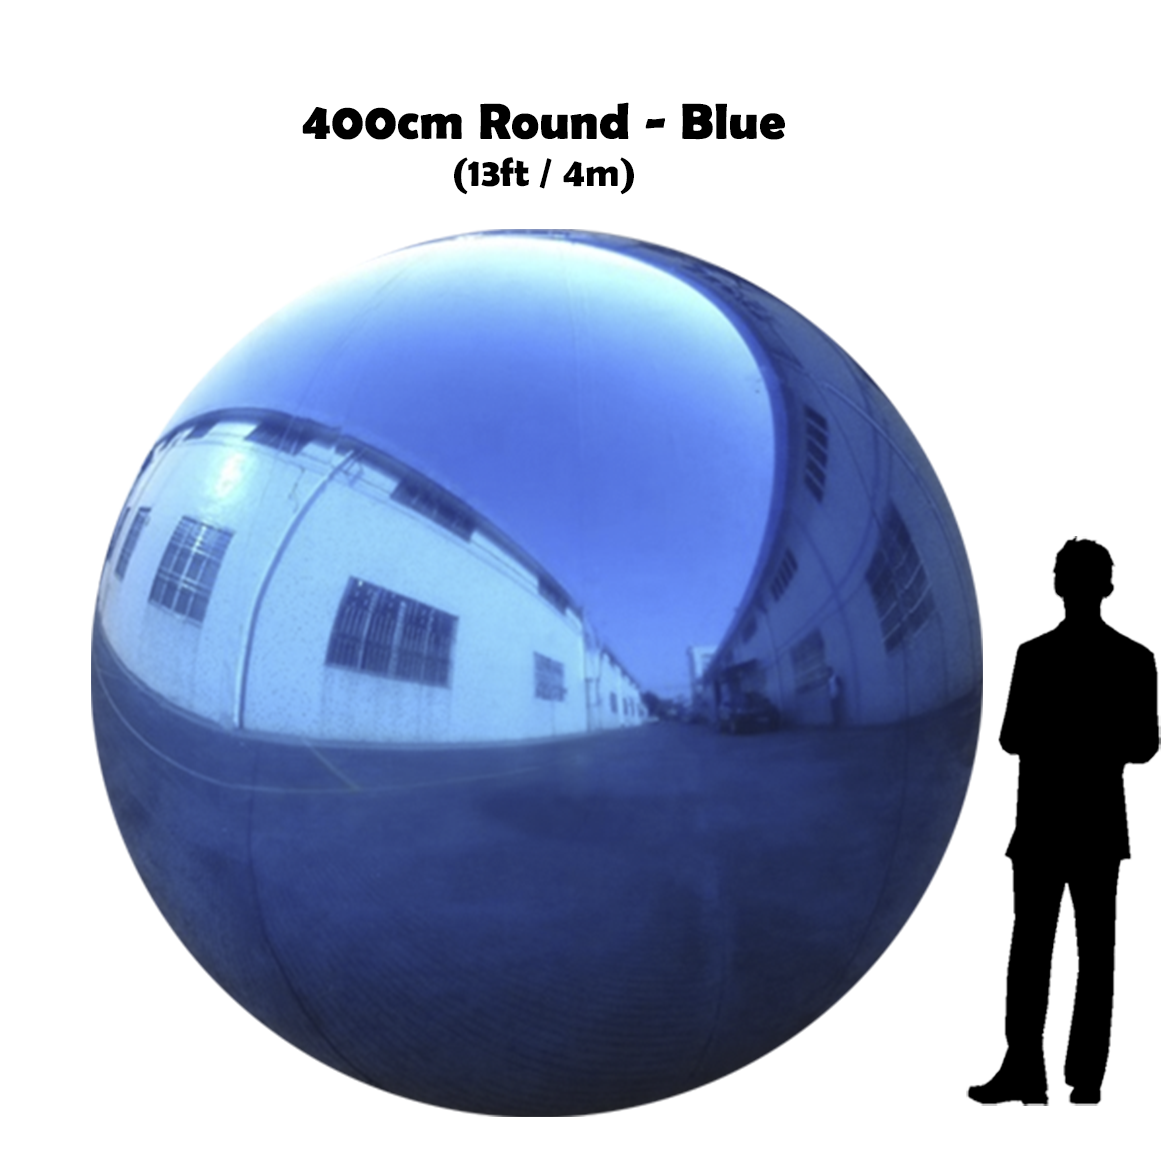 400 cm Big blue ball beside 5'10 guy silhouette 